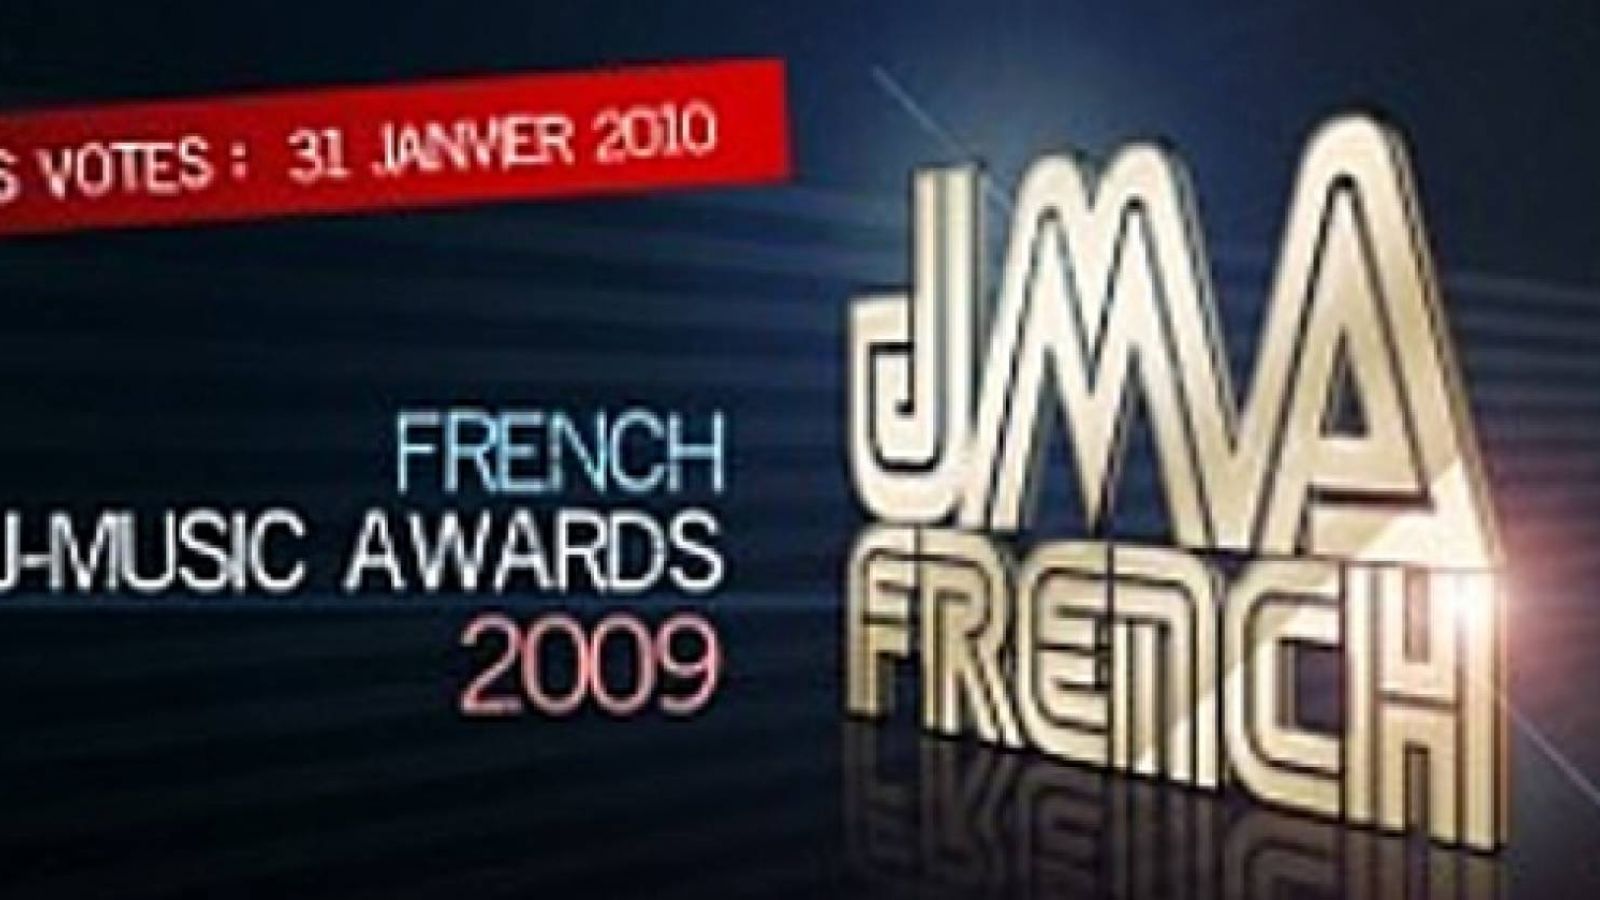 French J-music Awards 2009 : les résultats © French J-Music Awards / Le blog Jpop.fr